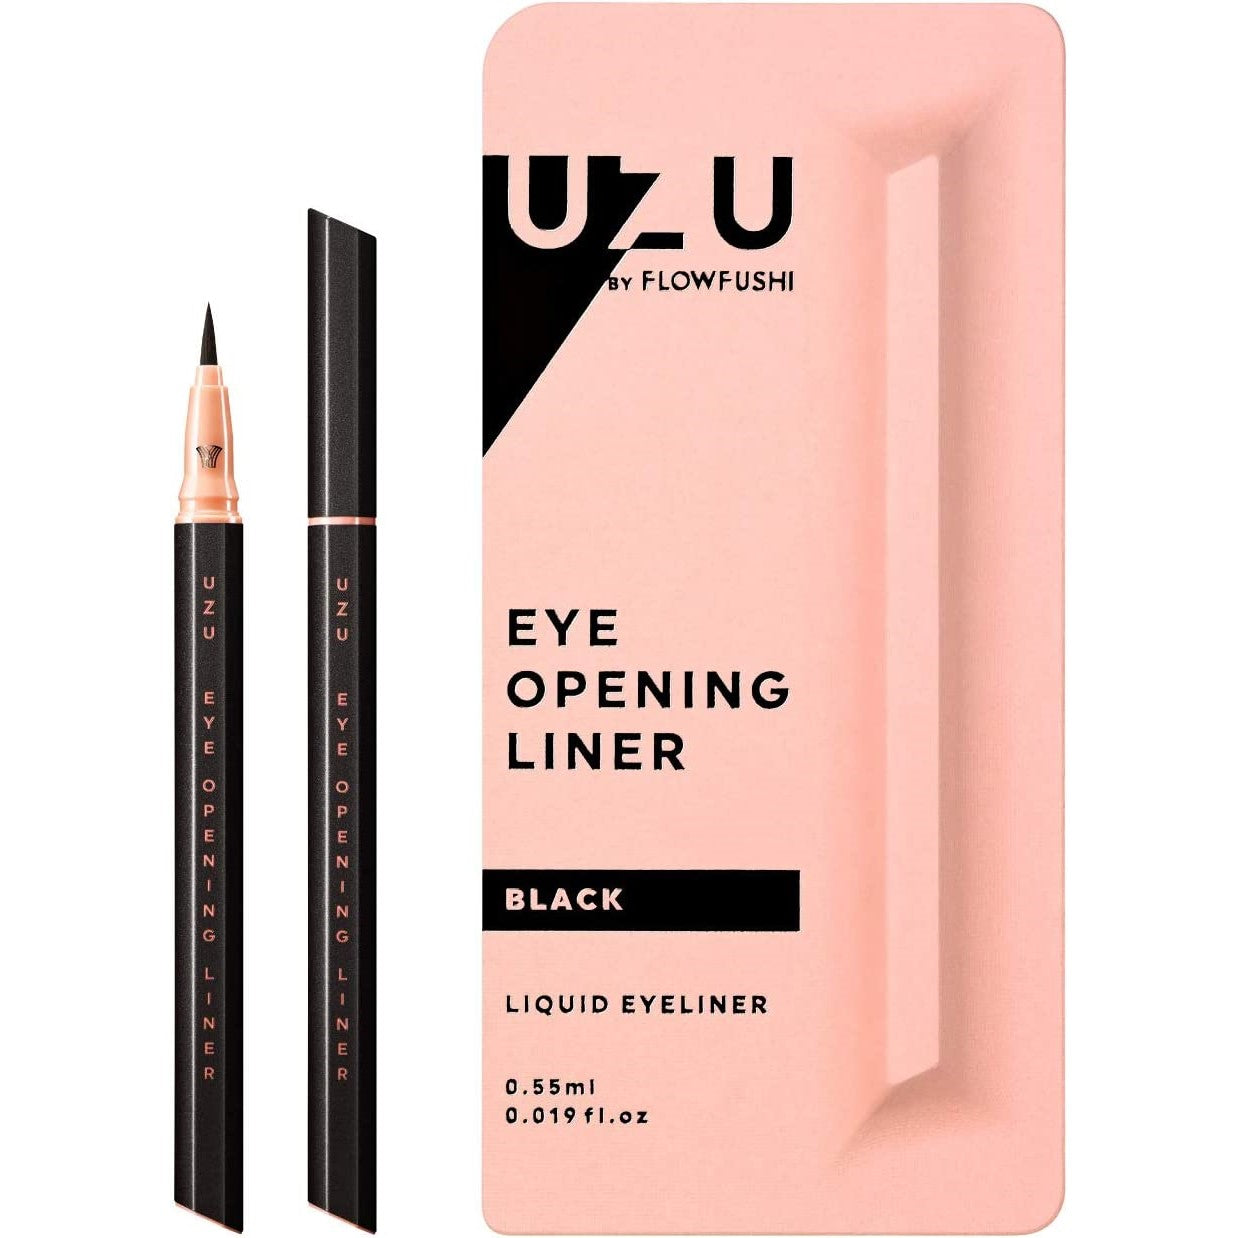 UZU Eyeliner By Flowfushi - Black Color (Made in Japan)